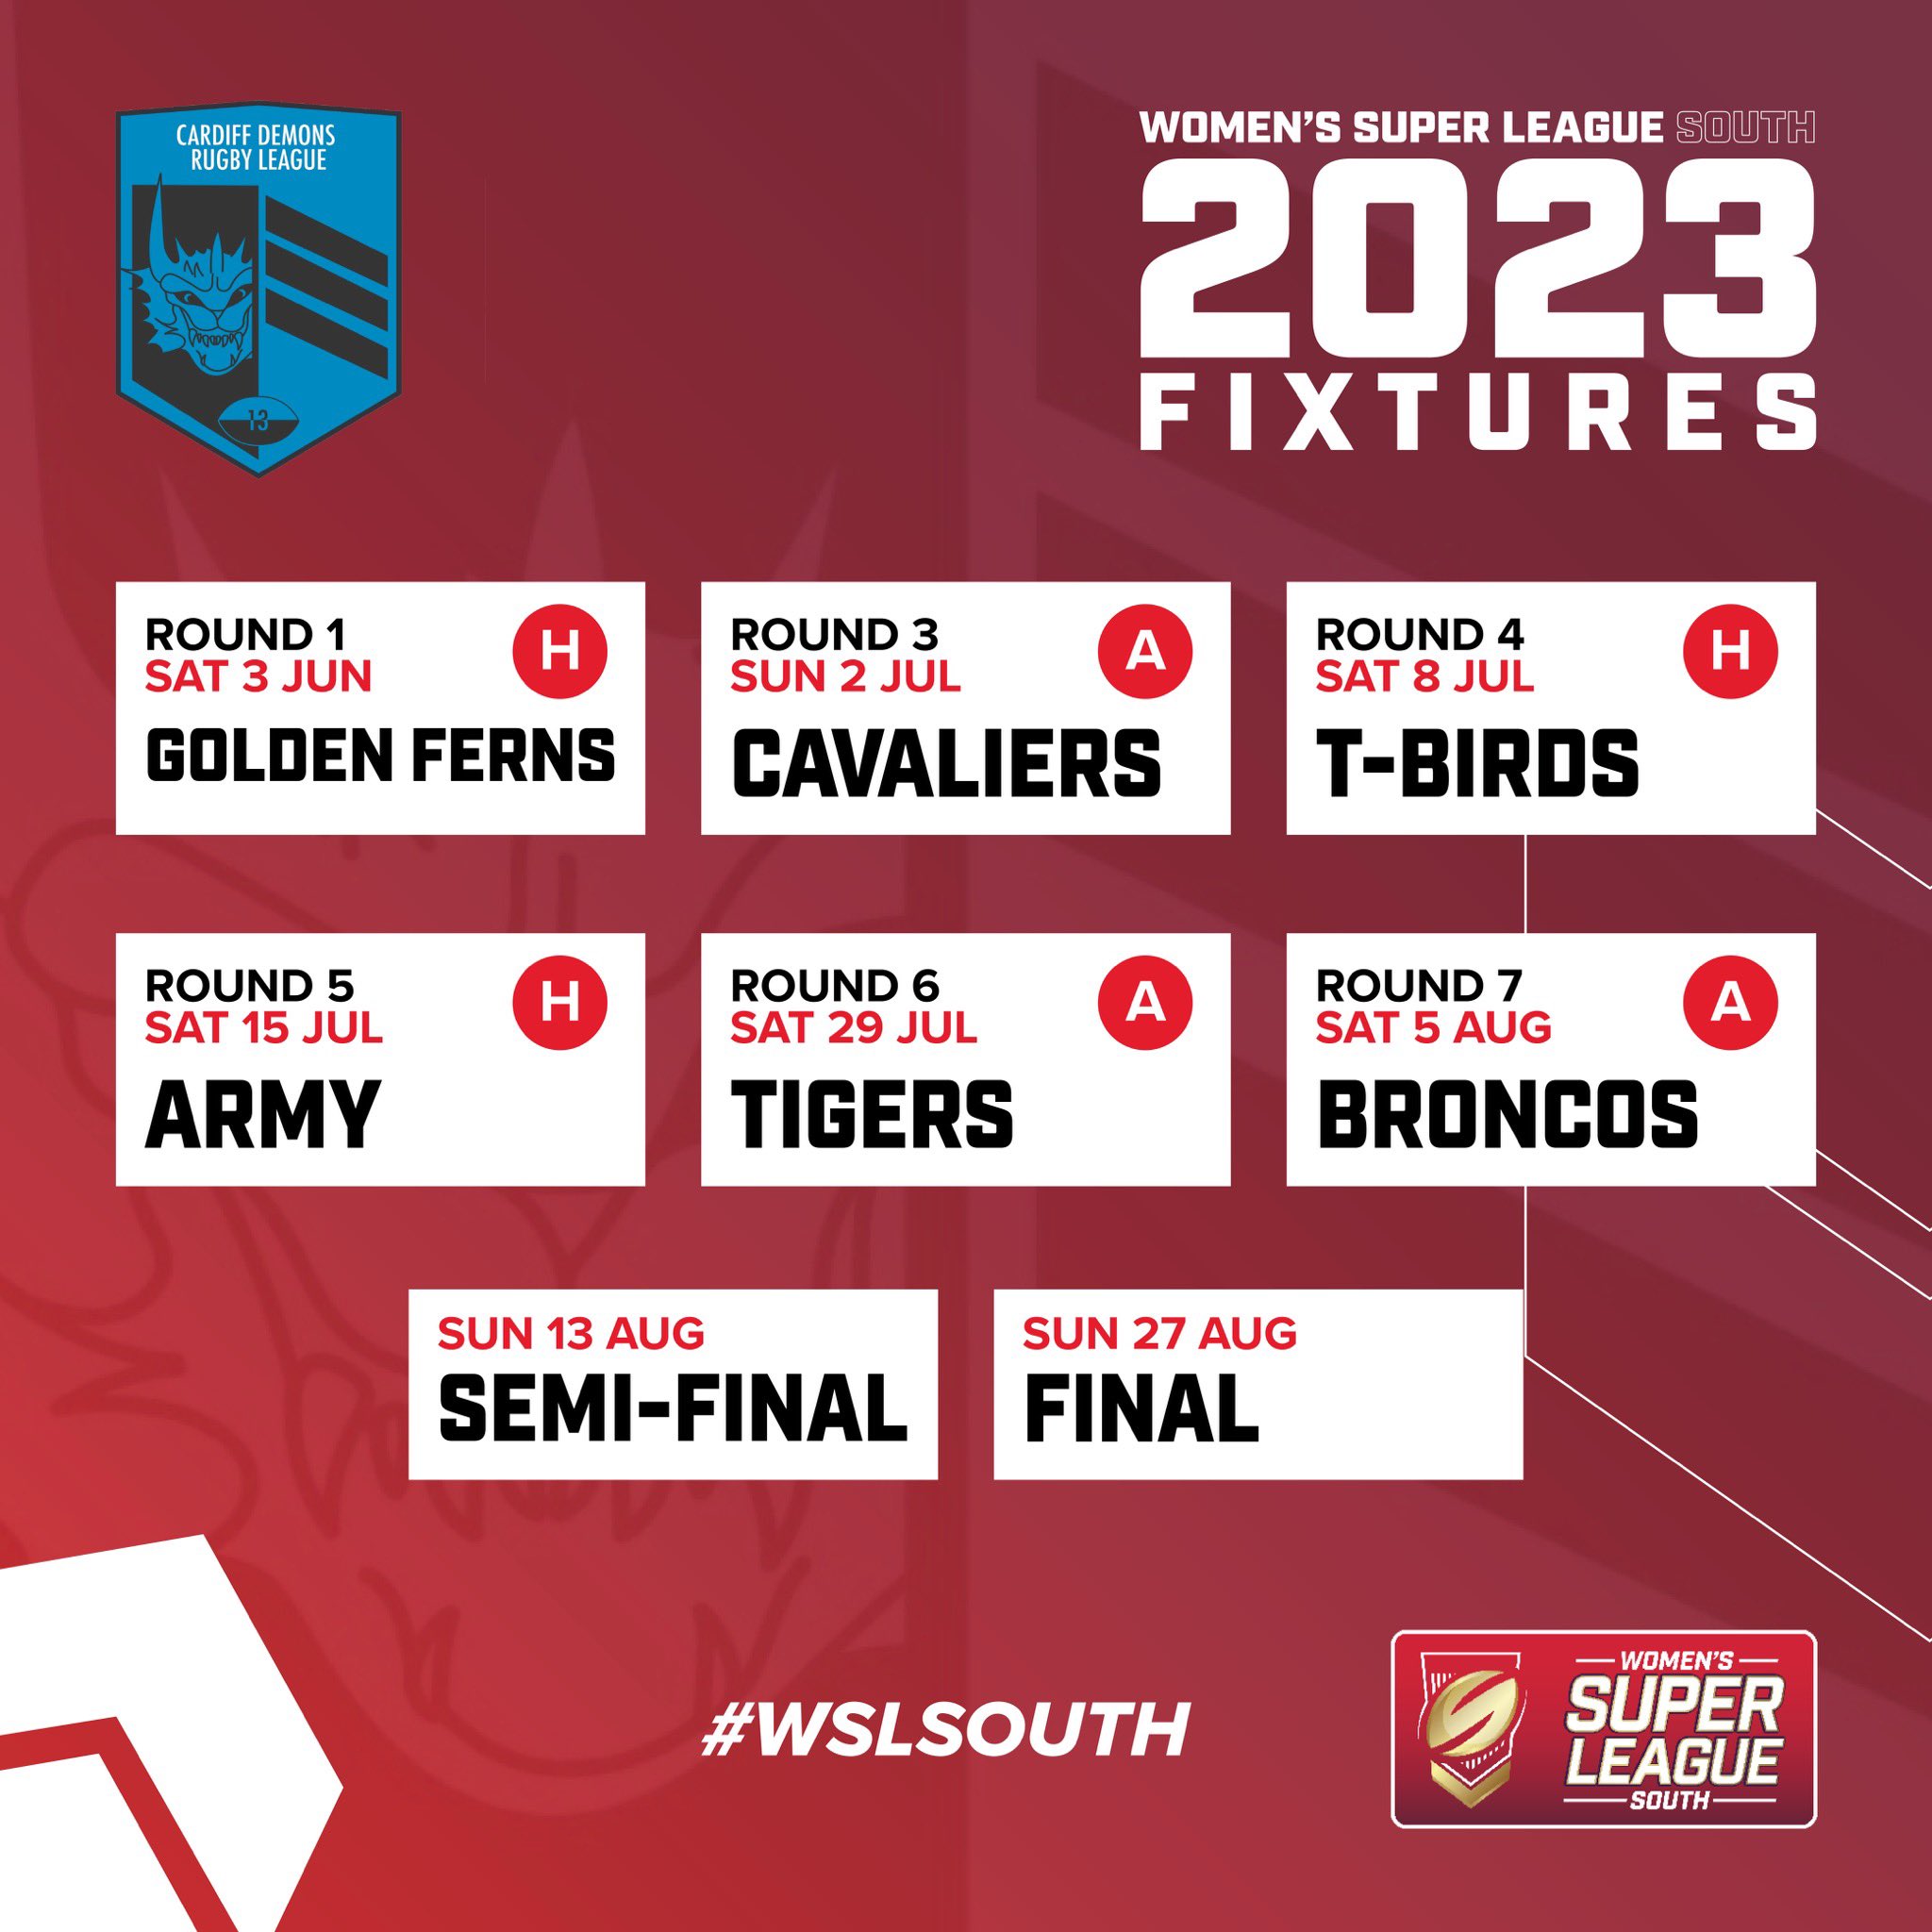 Women’s Super League South 2023 fixtures announced Wales Rugby League